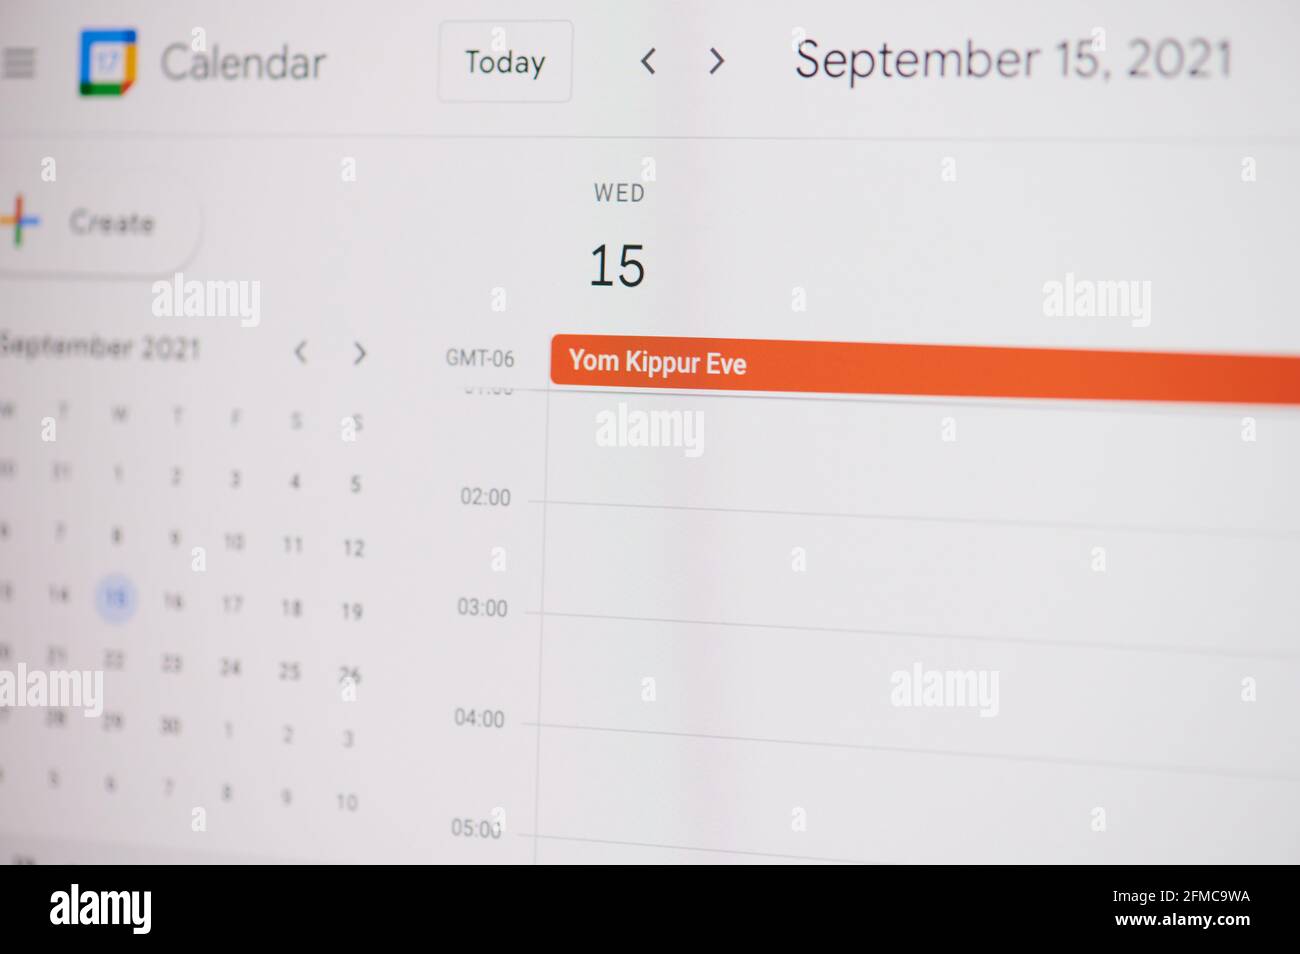 New york, USA - February 17, 2021: Yom Kippur Eve 15 of September on google calendar on laptop screen close up view. Stock Photo